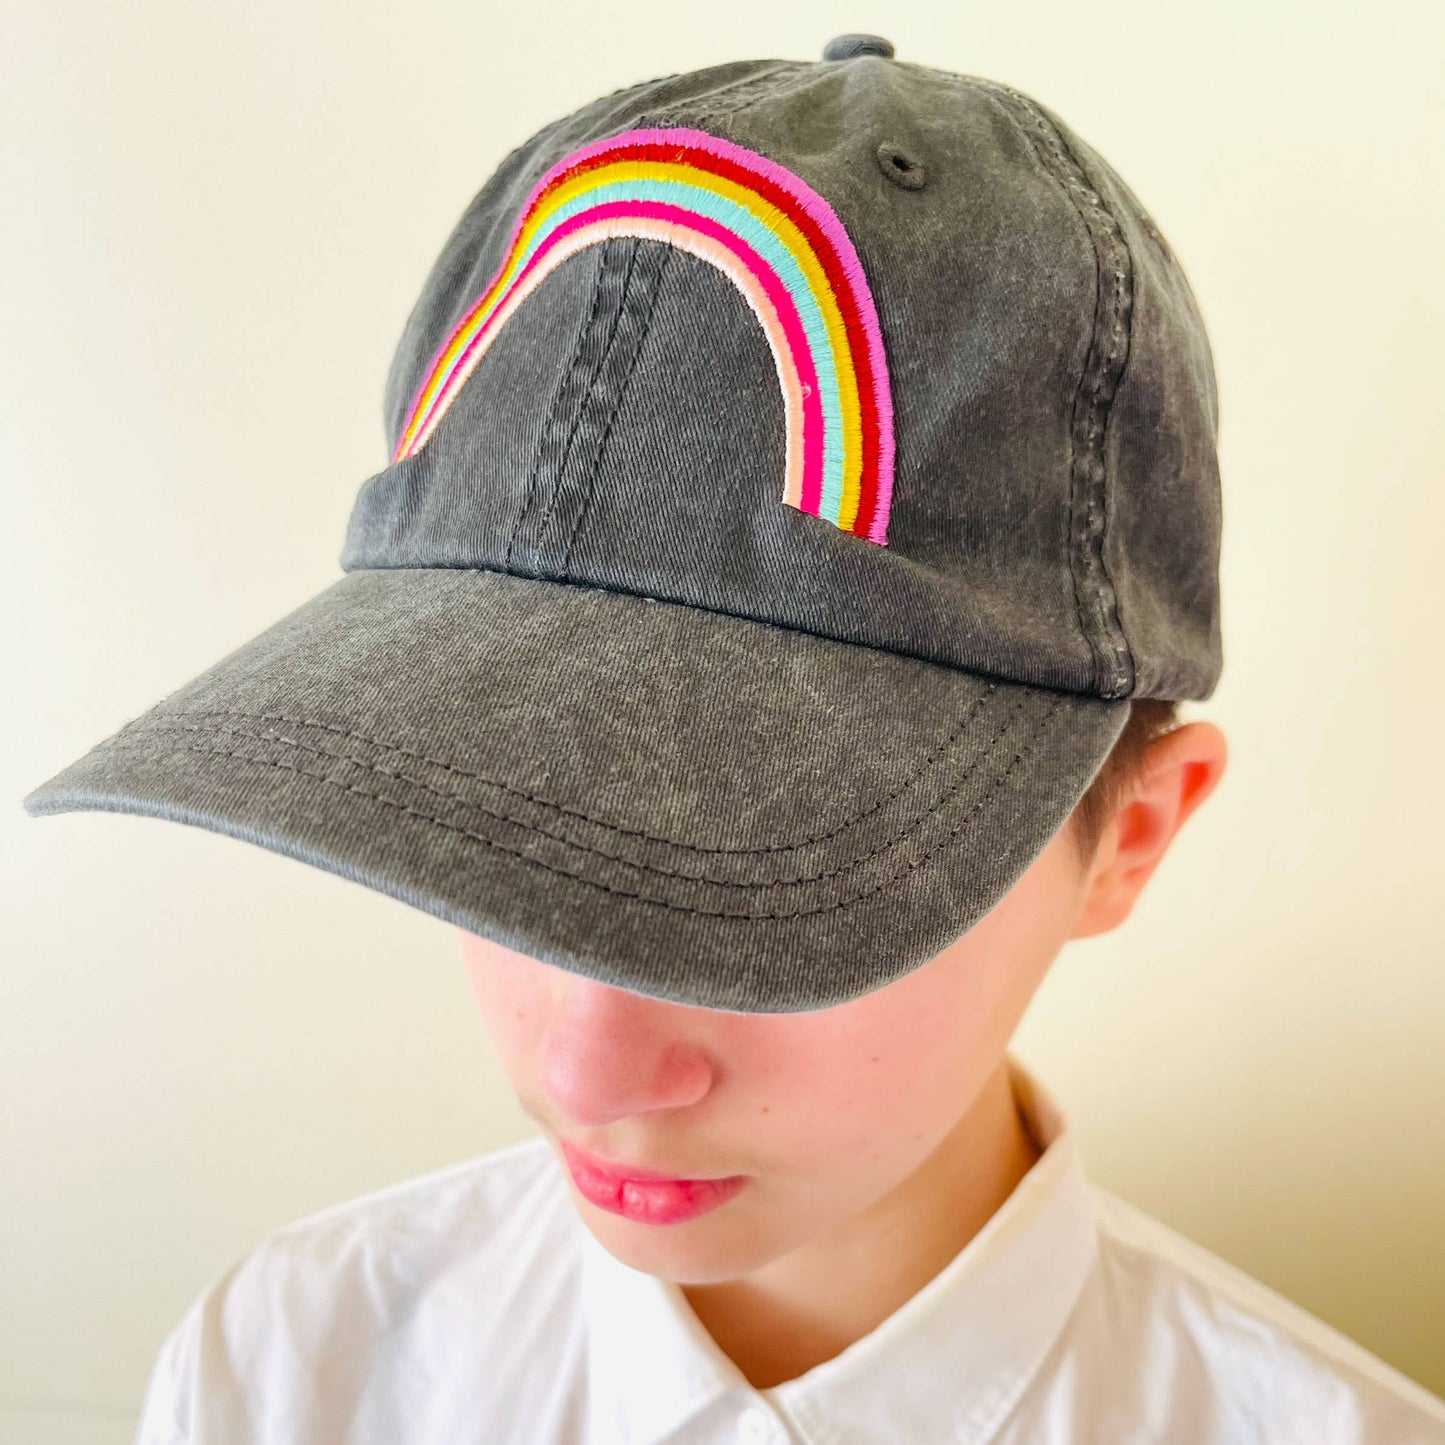 Banquet Workshop - Super Rainbow Embroidered Baseball Cap